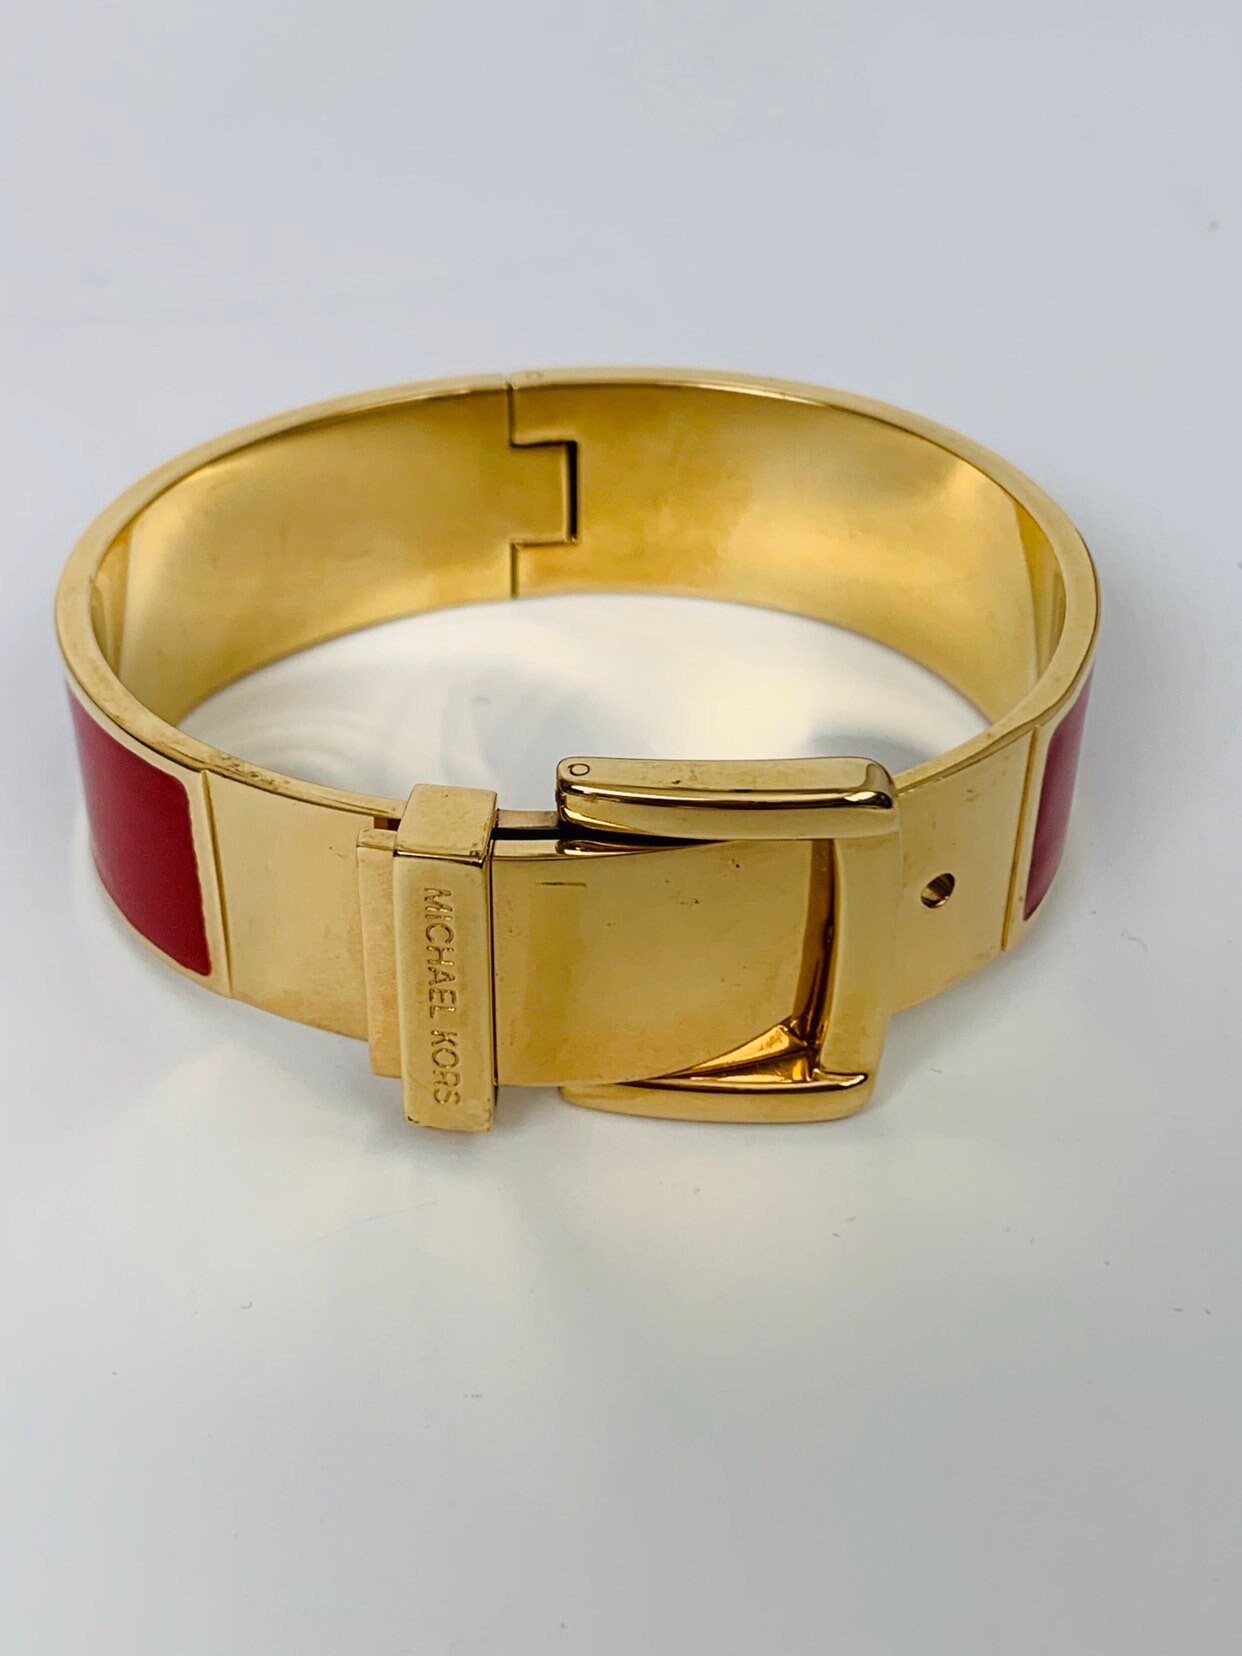 Michael Kors Heritage Buckle Bangle Bracelet in GoldTone & Animal Print |  Bangles, Michael kors, Bangle bracelets